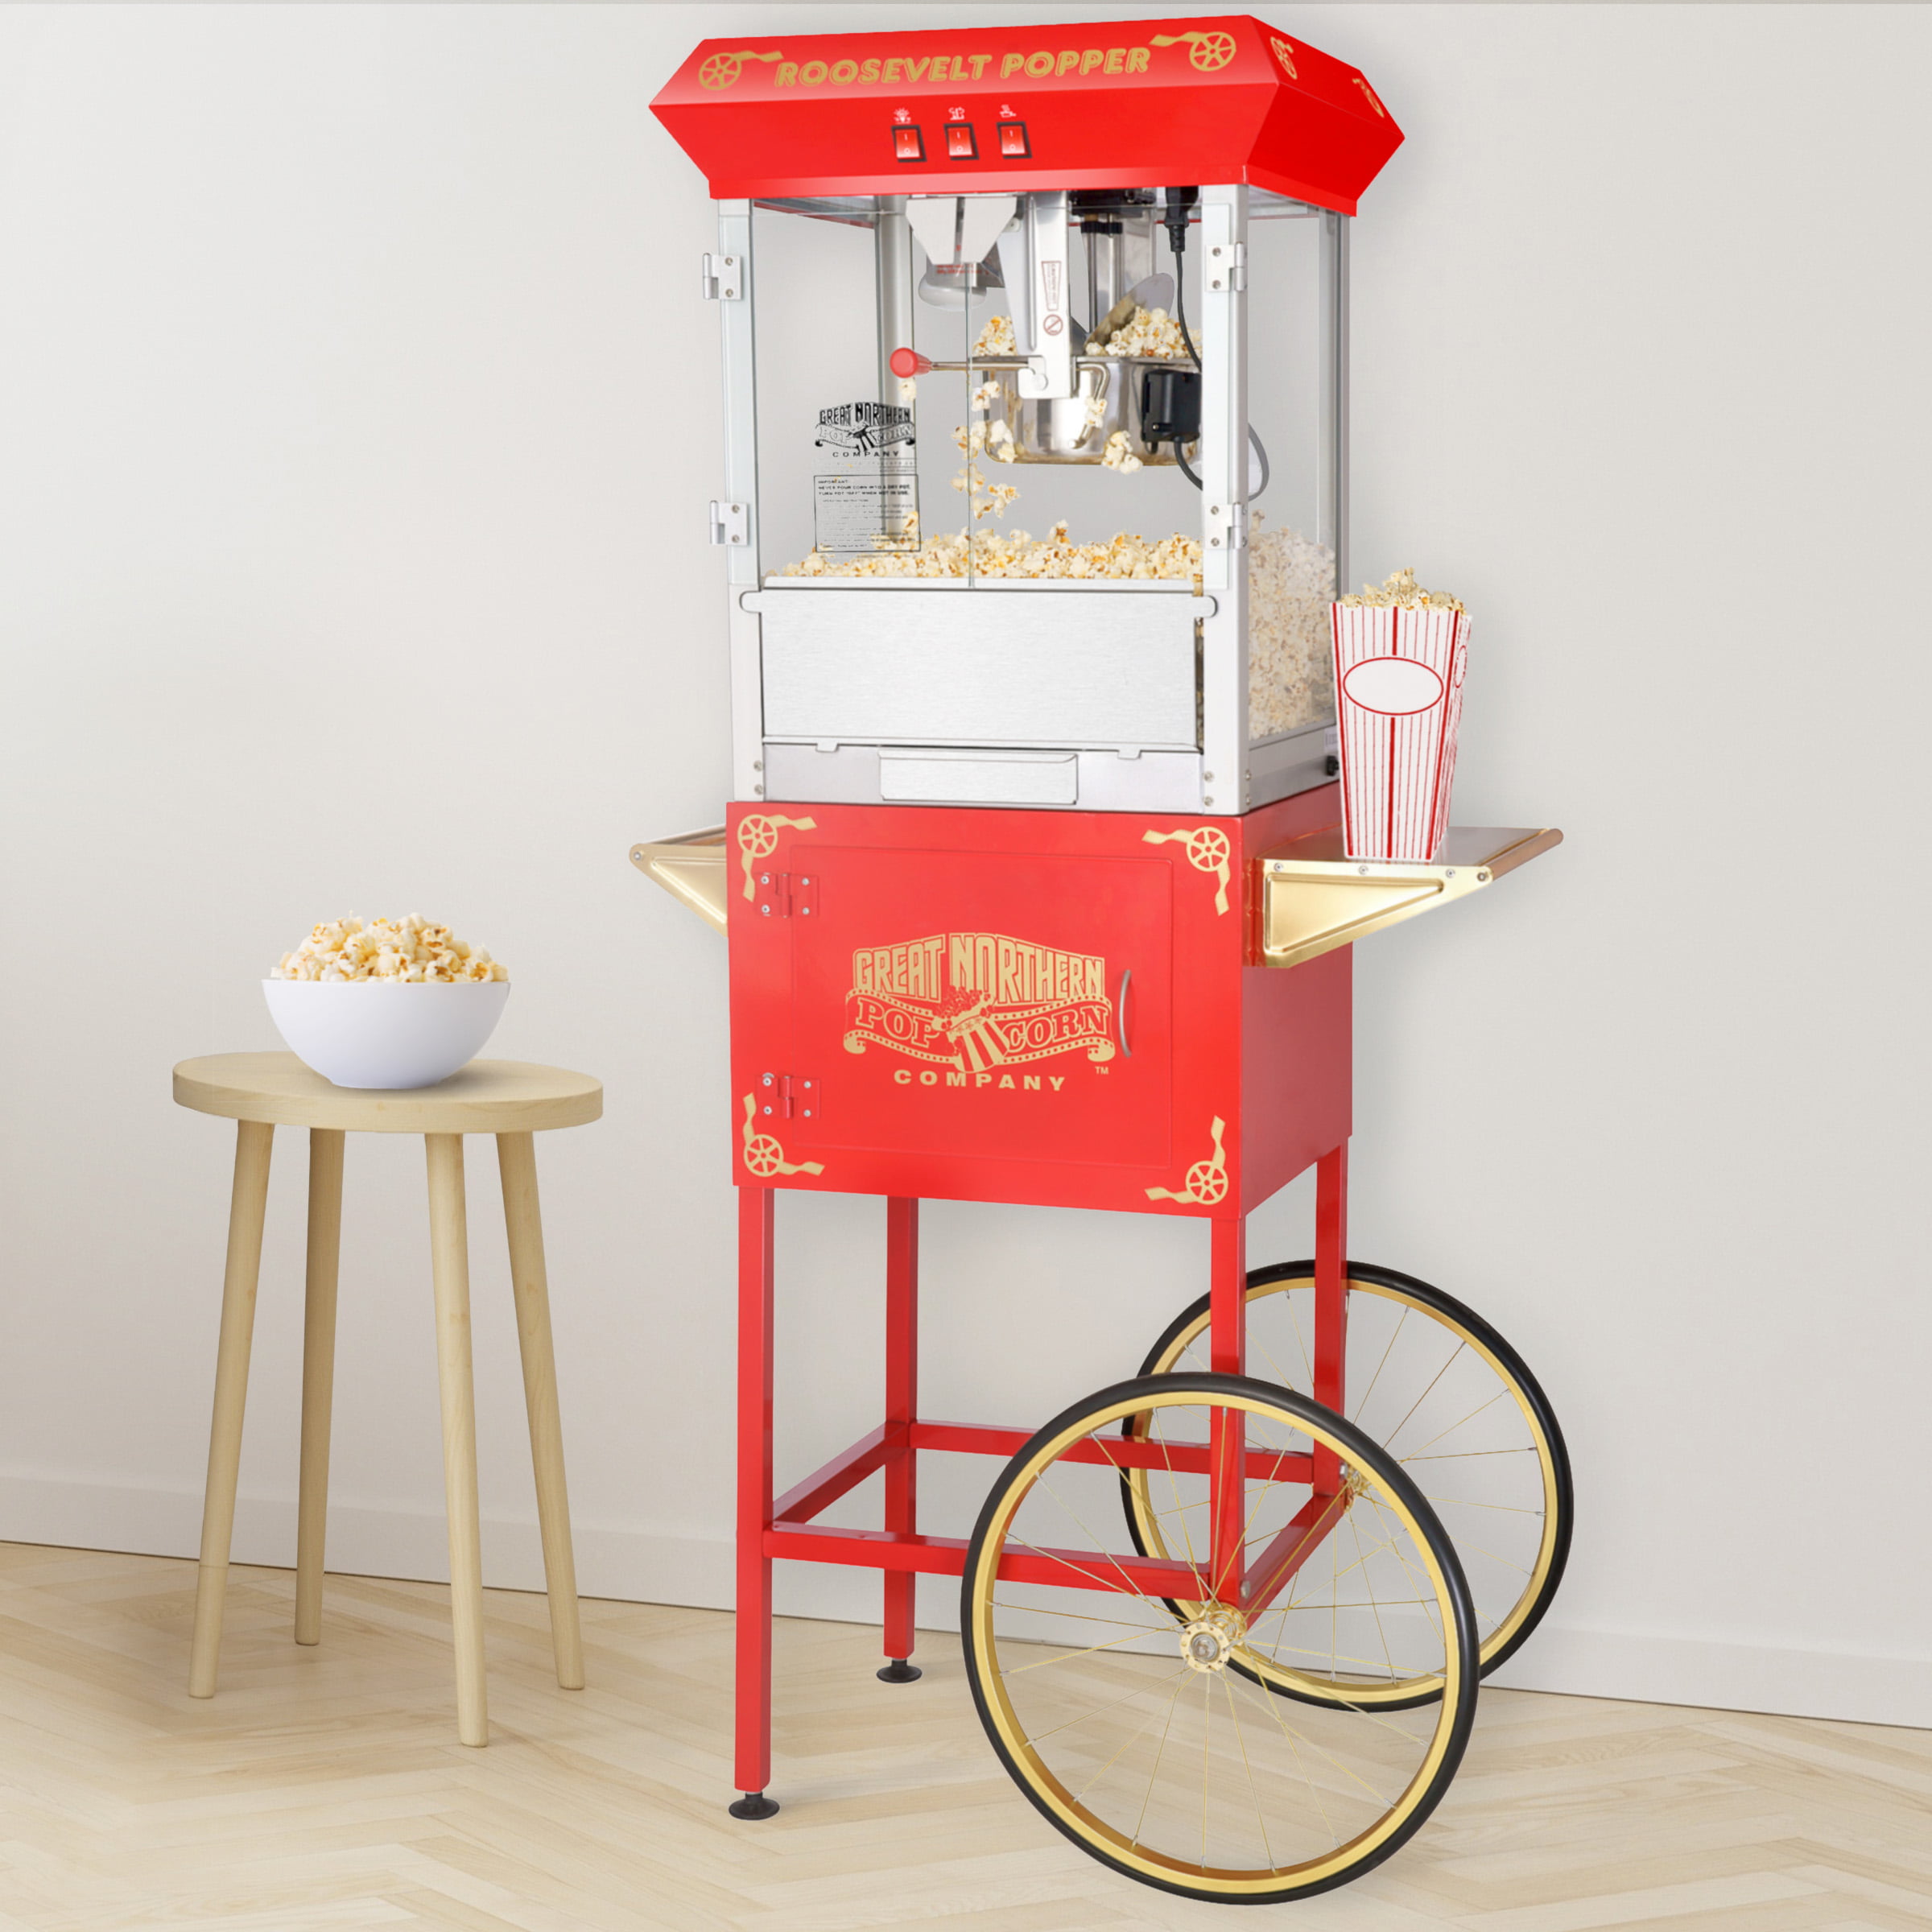 Popcorn Machine with Cart - $90